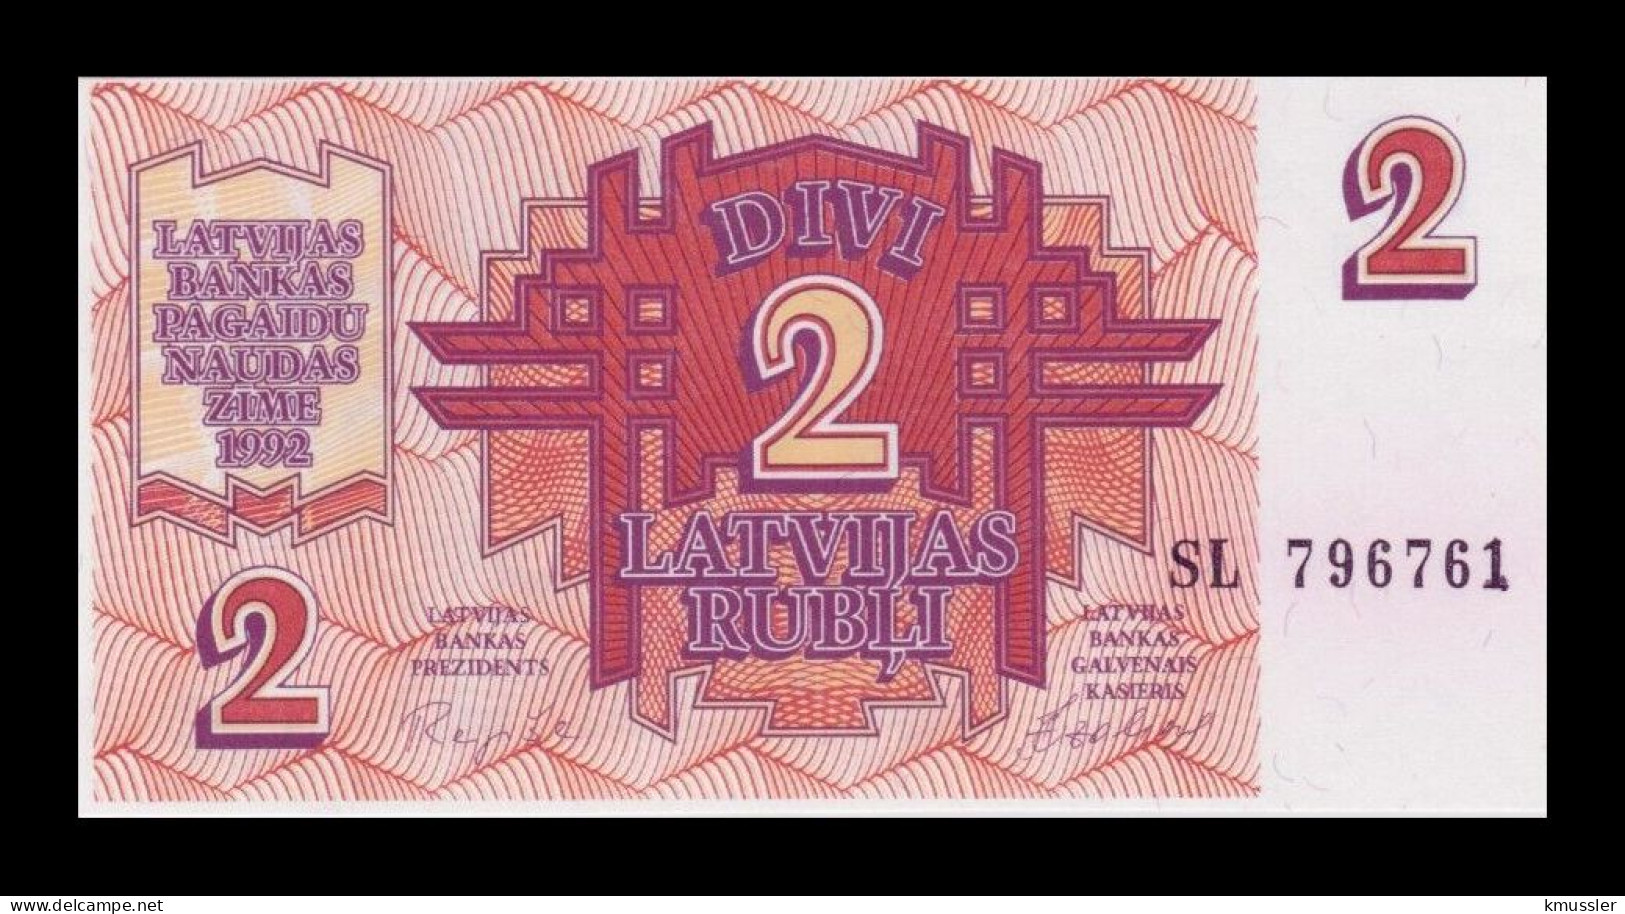 # # # Banknote Lettland (Latvijas) 2 Rubel (Rublis) 1992 UNC # # # - Letland